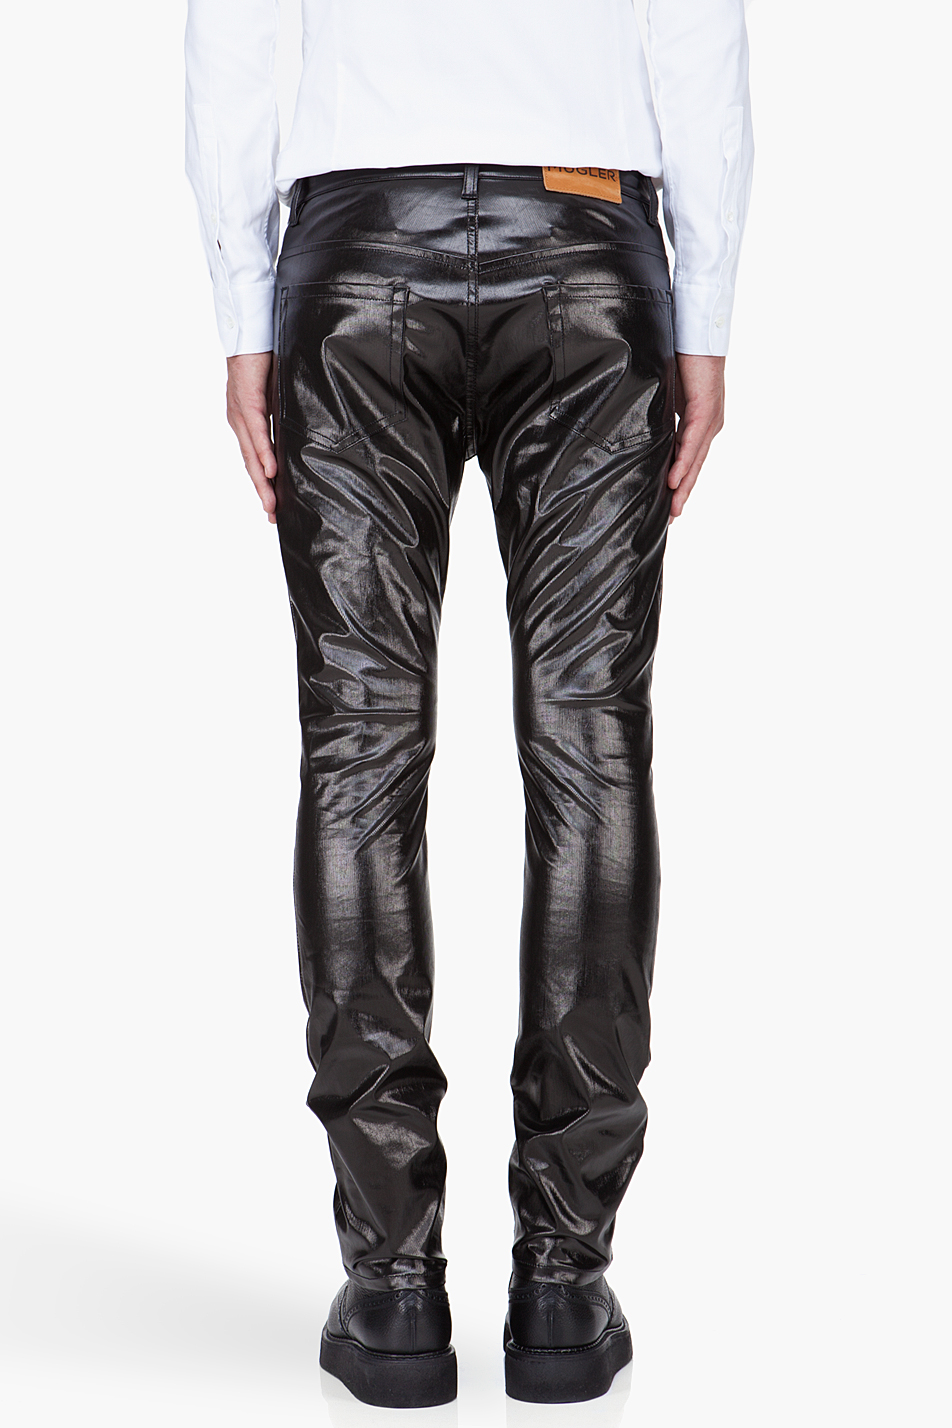 Lyst - Mugler Faux Leather Pants in Black for Men